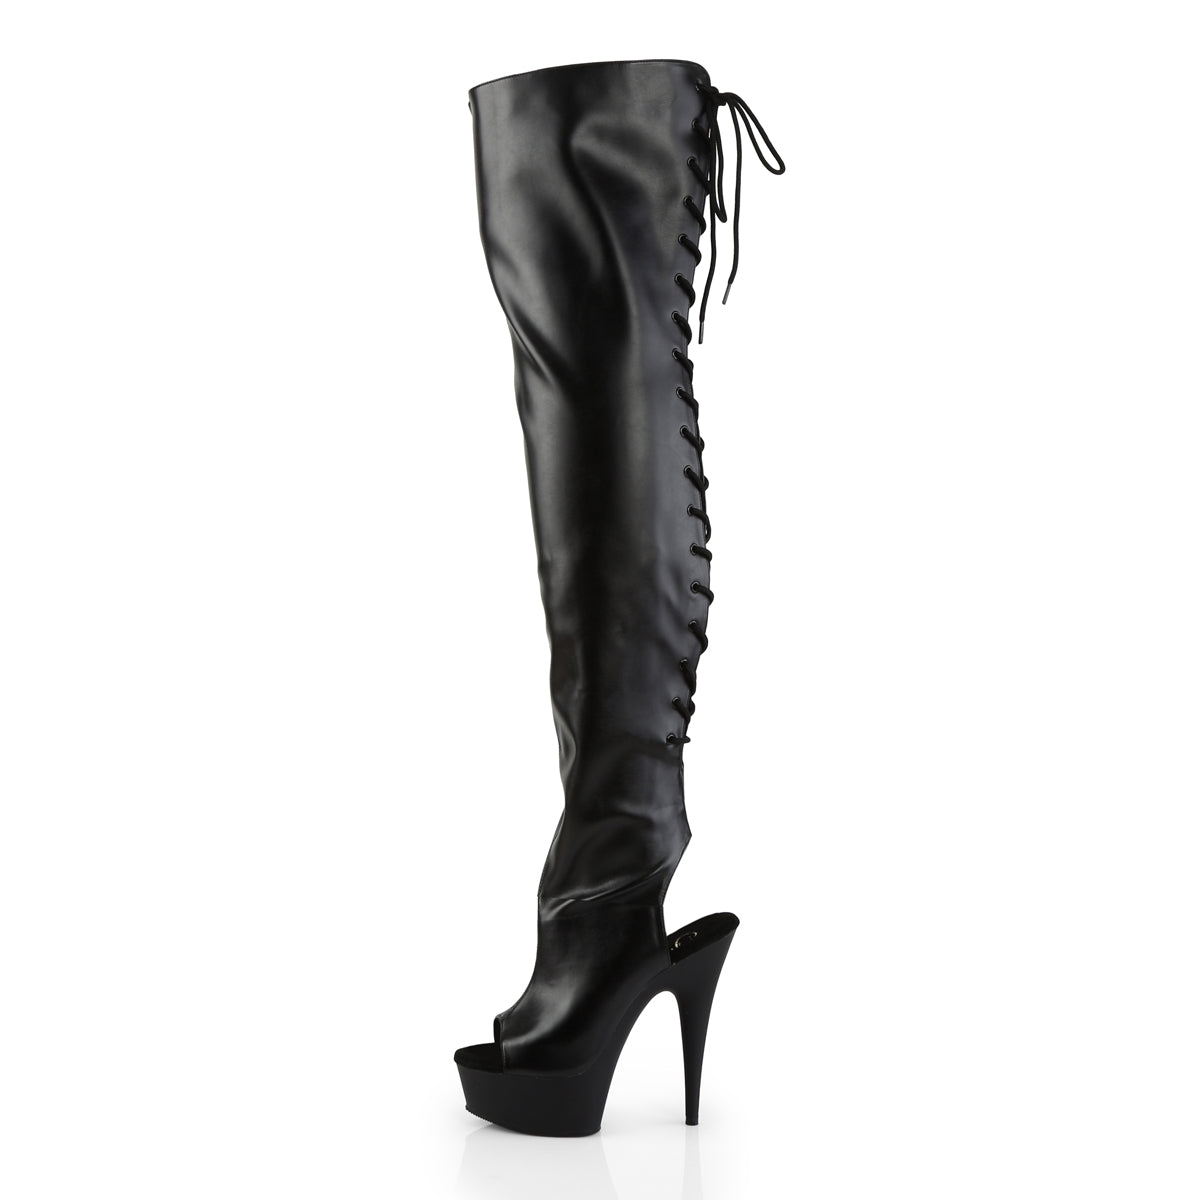 DELIGHT-3017 Pleaser 6 Inch Heel Black Pole Dancer Platforms-Pleaser- Sexy Shoes Pole Dance Heels